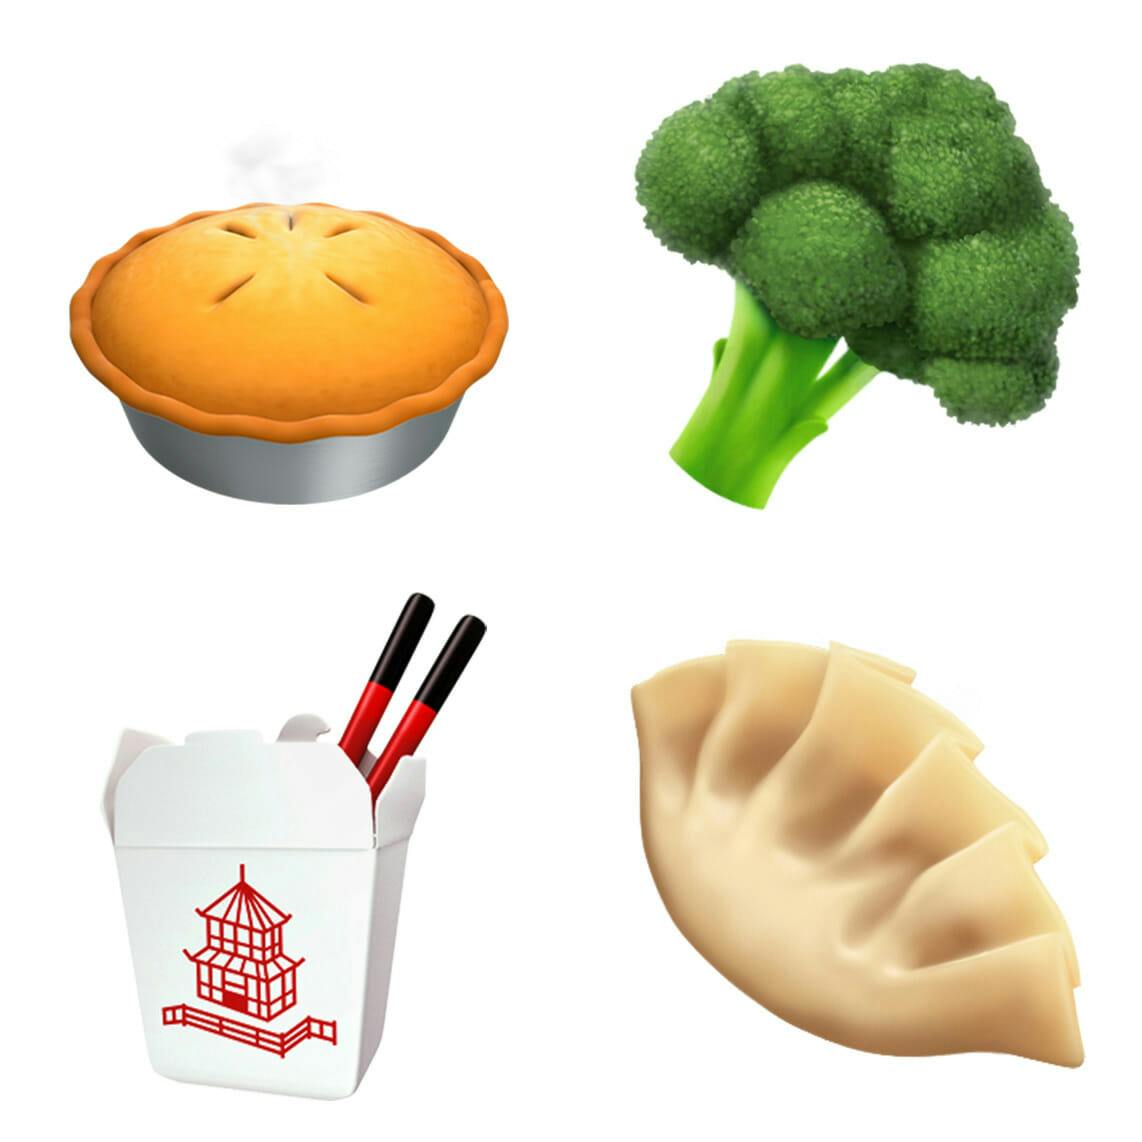 Food emoji, pie, broccoli, takeout box, dumpling